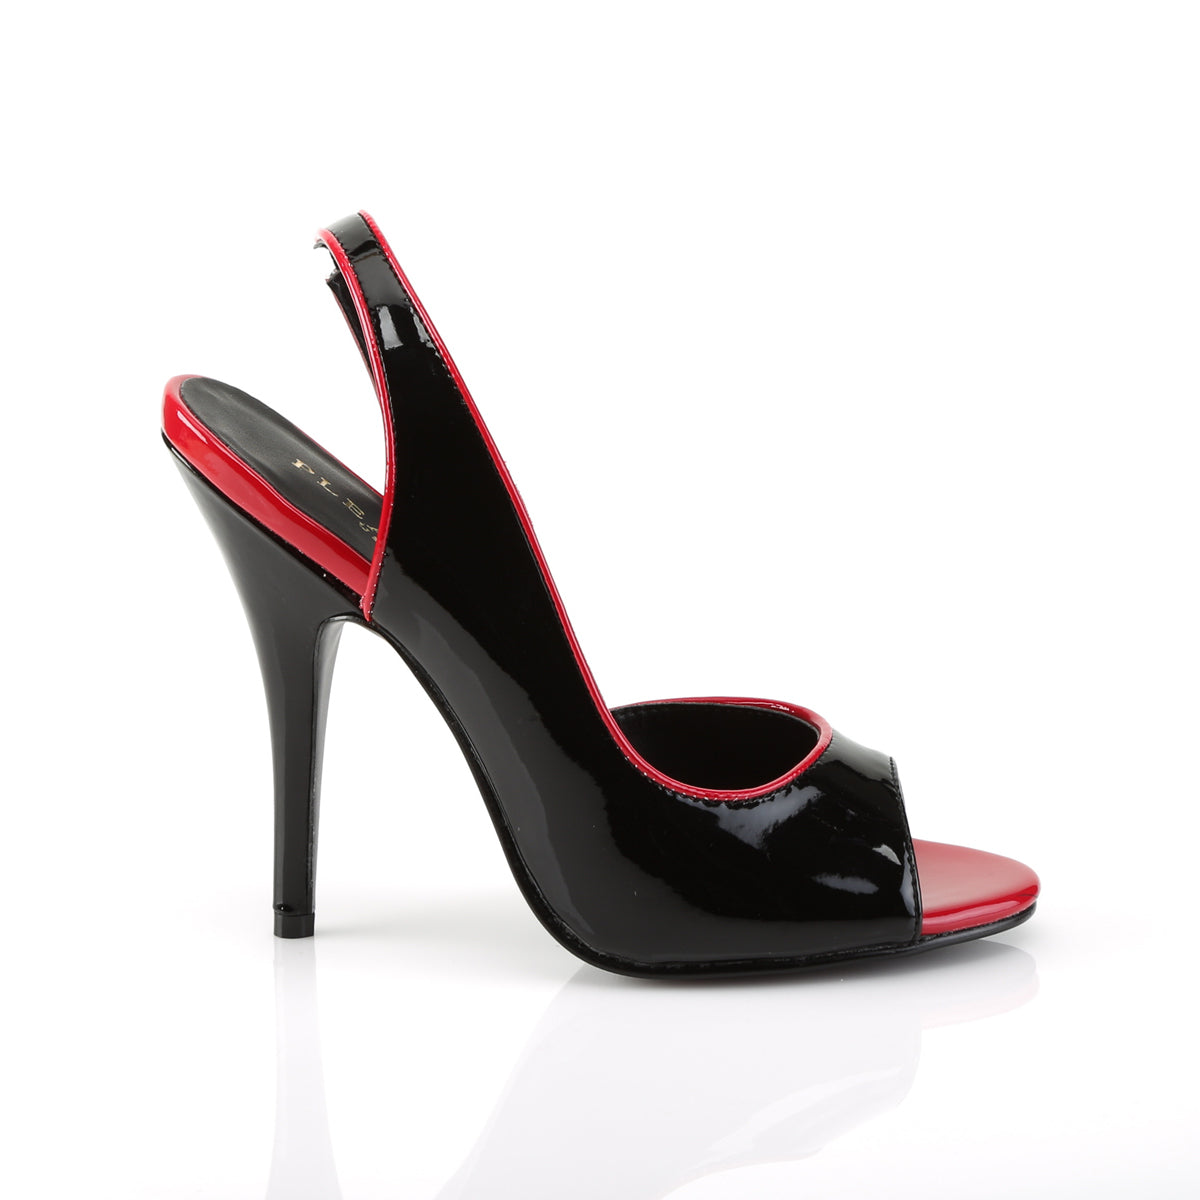 SEDUCE-117 Pleaser 5 Inch Heel Black and Red Fetish Footwear-Pleaser- Sexy Shoes Fetish Heels